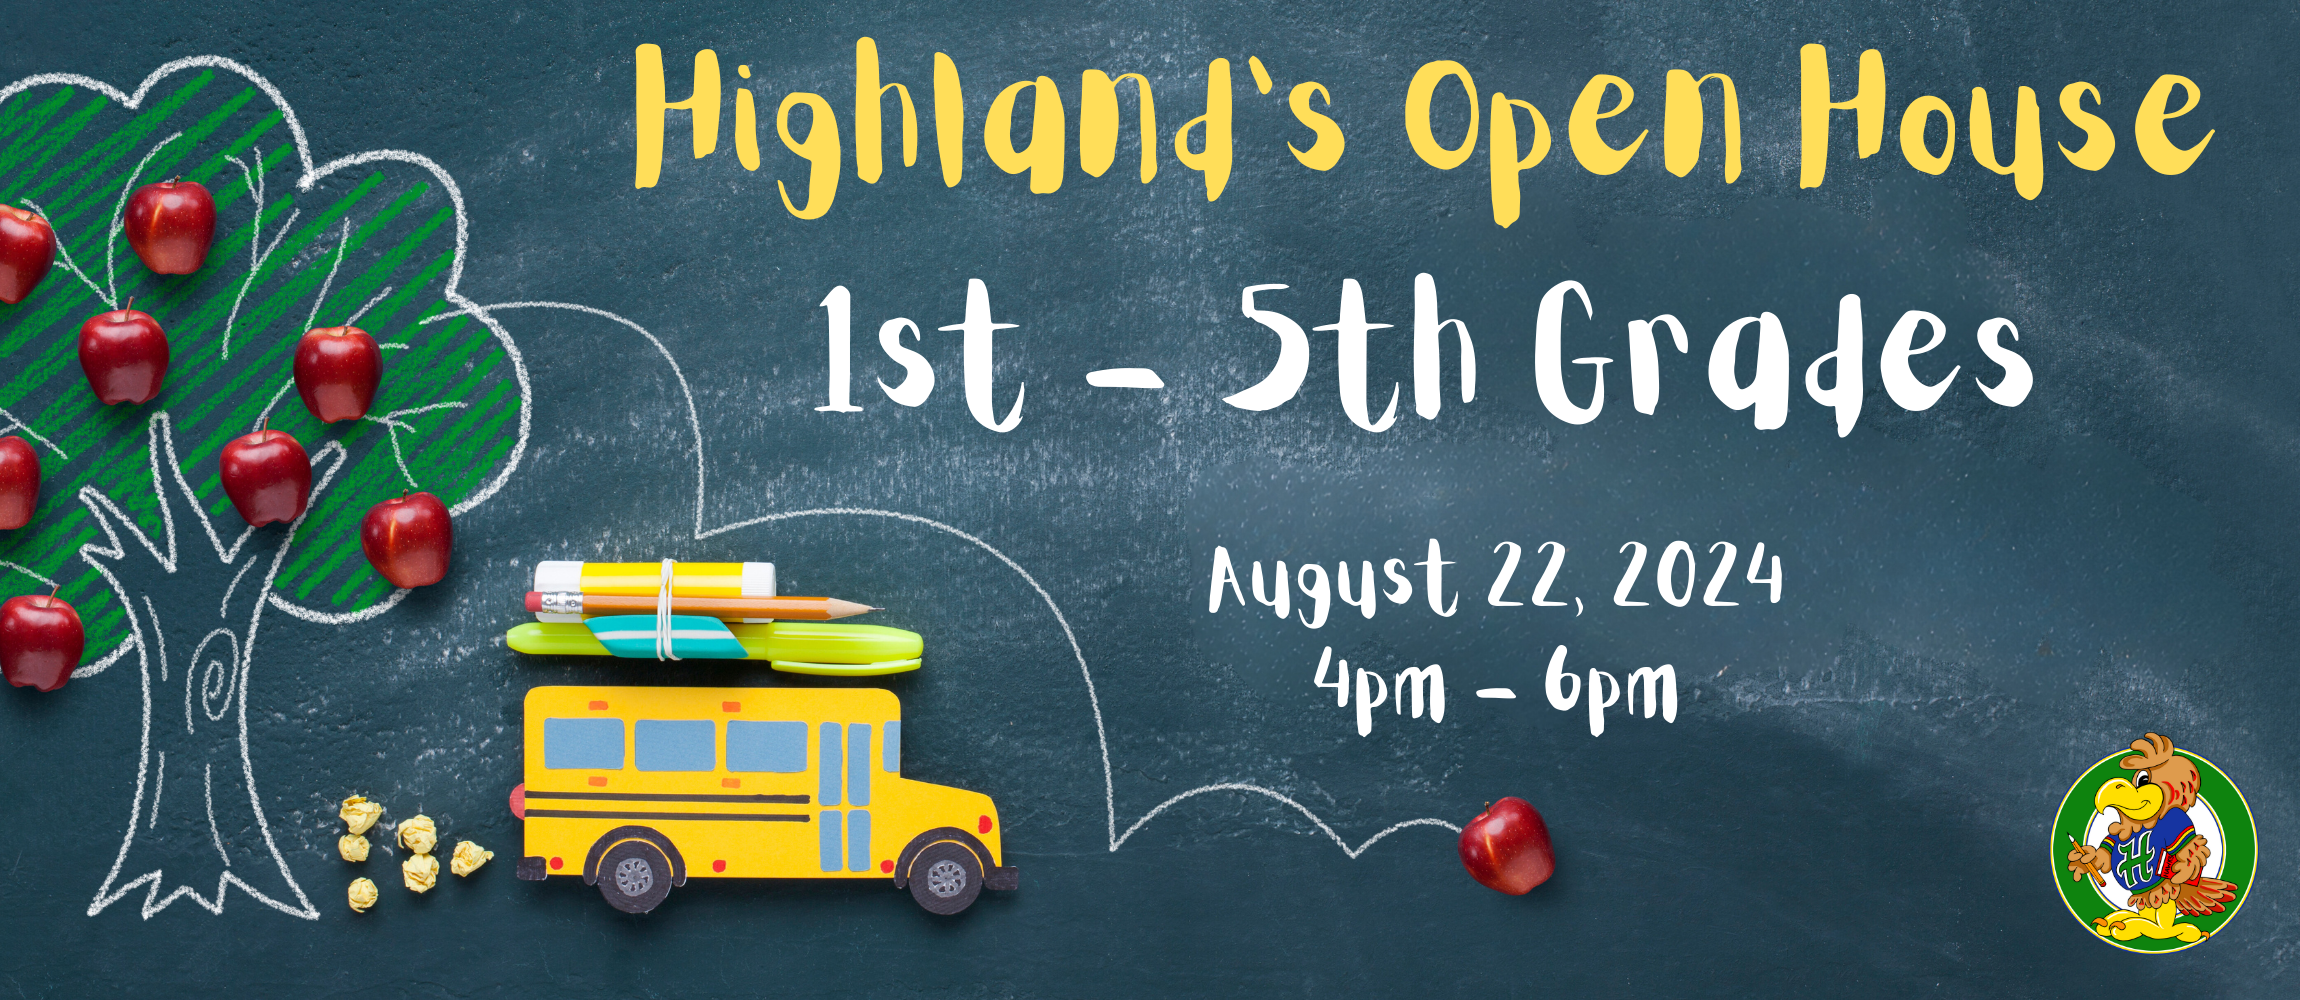 Highland's Open House Thursday August 22nd 4:00-6:00